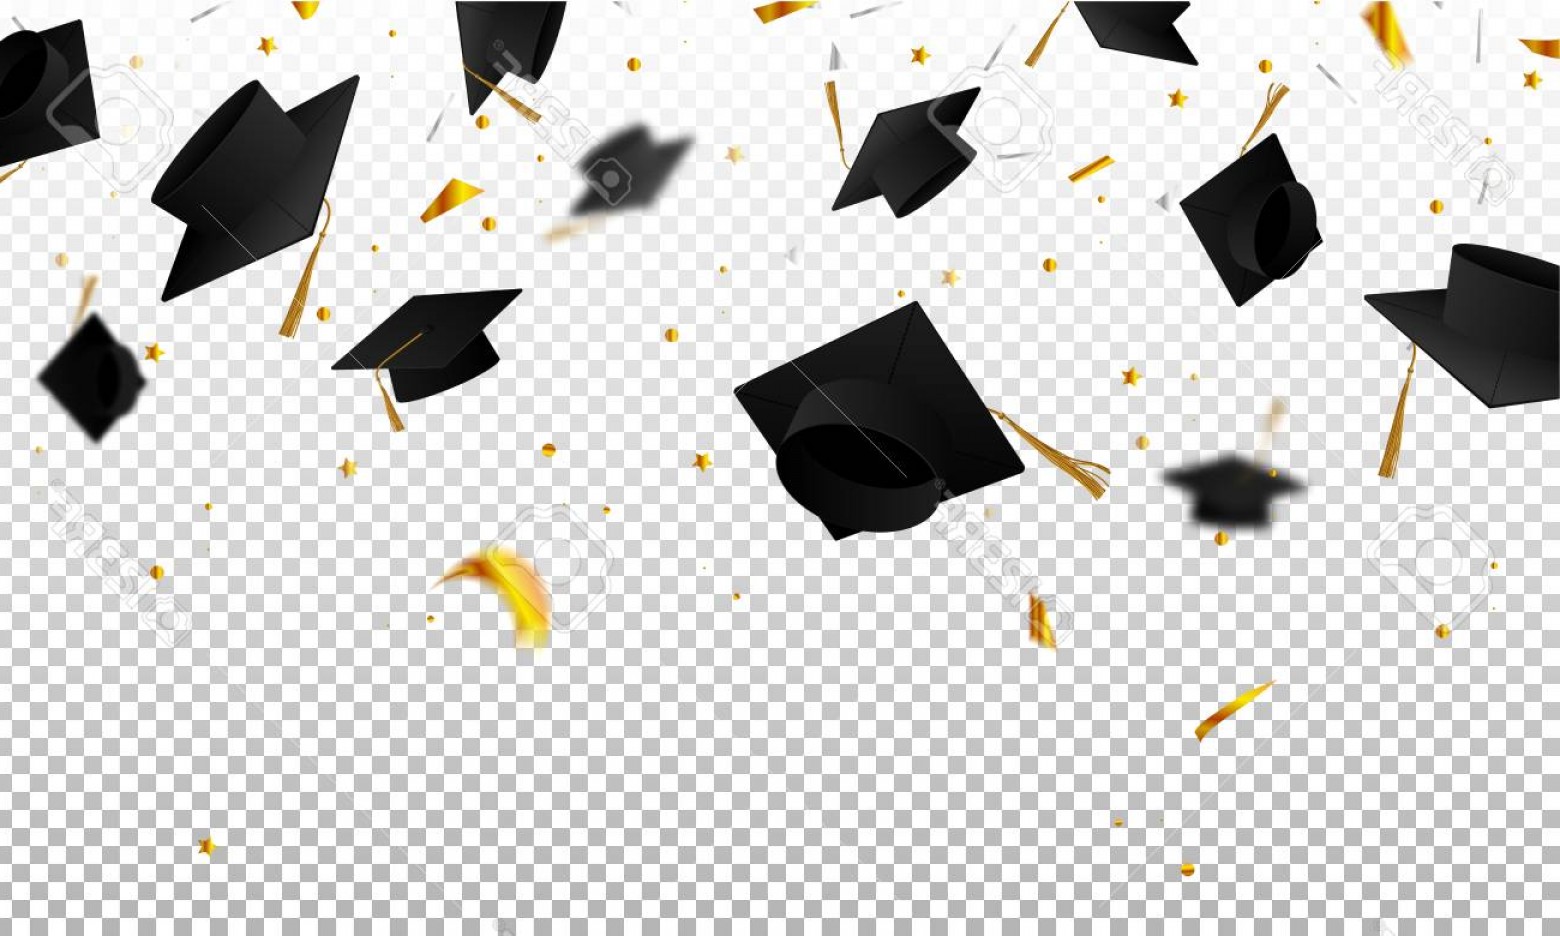 Photostock Vector Graduate Caps And Confetti On A Transparent.